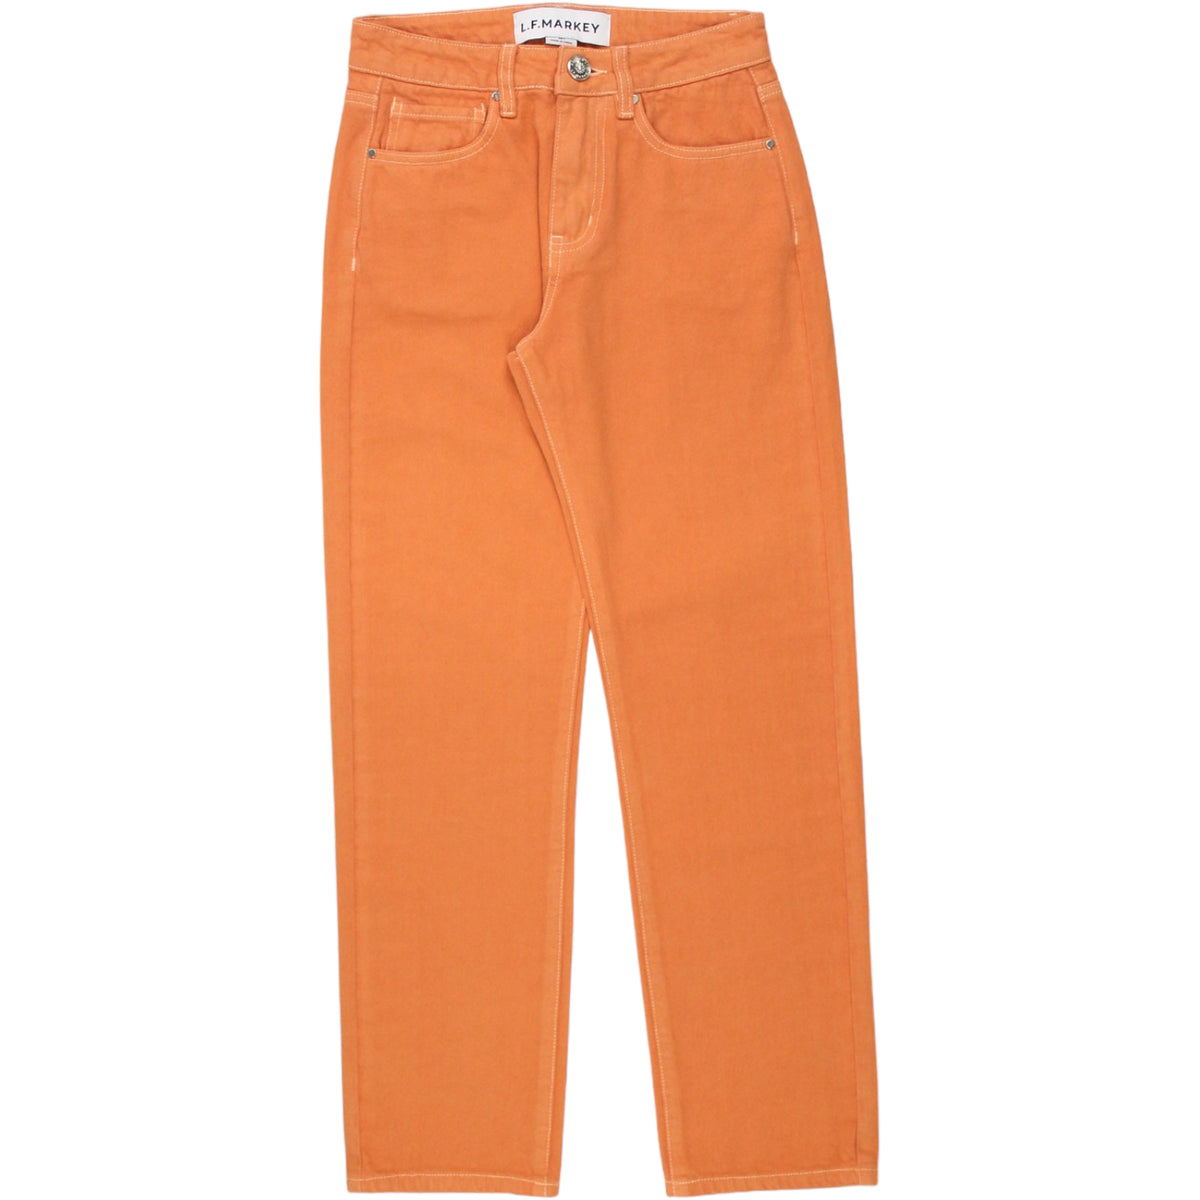 LF Markey Dusty Orange Canvas Jeans